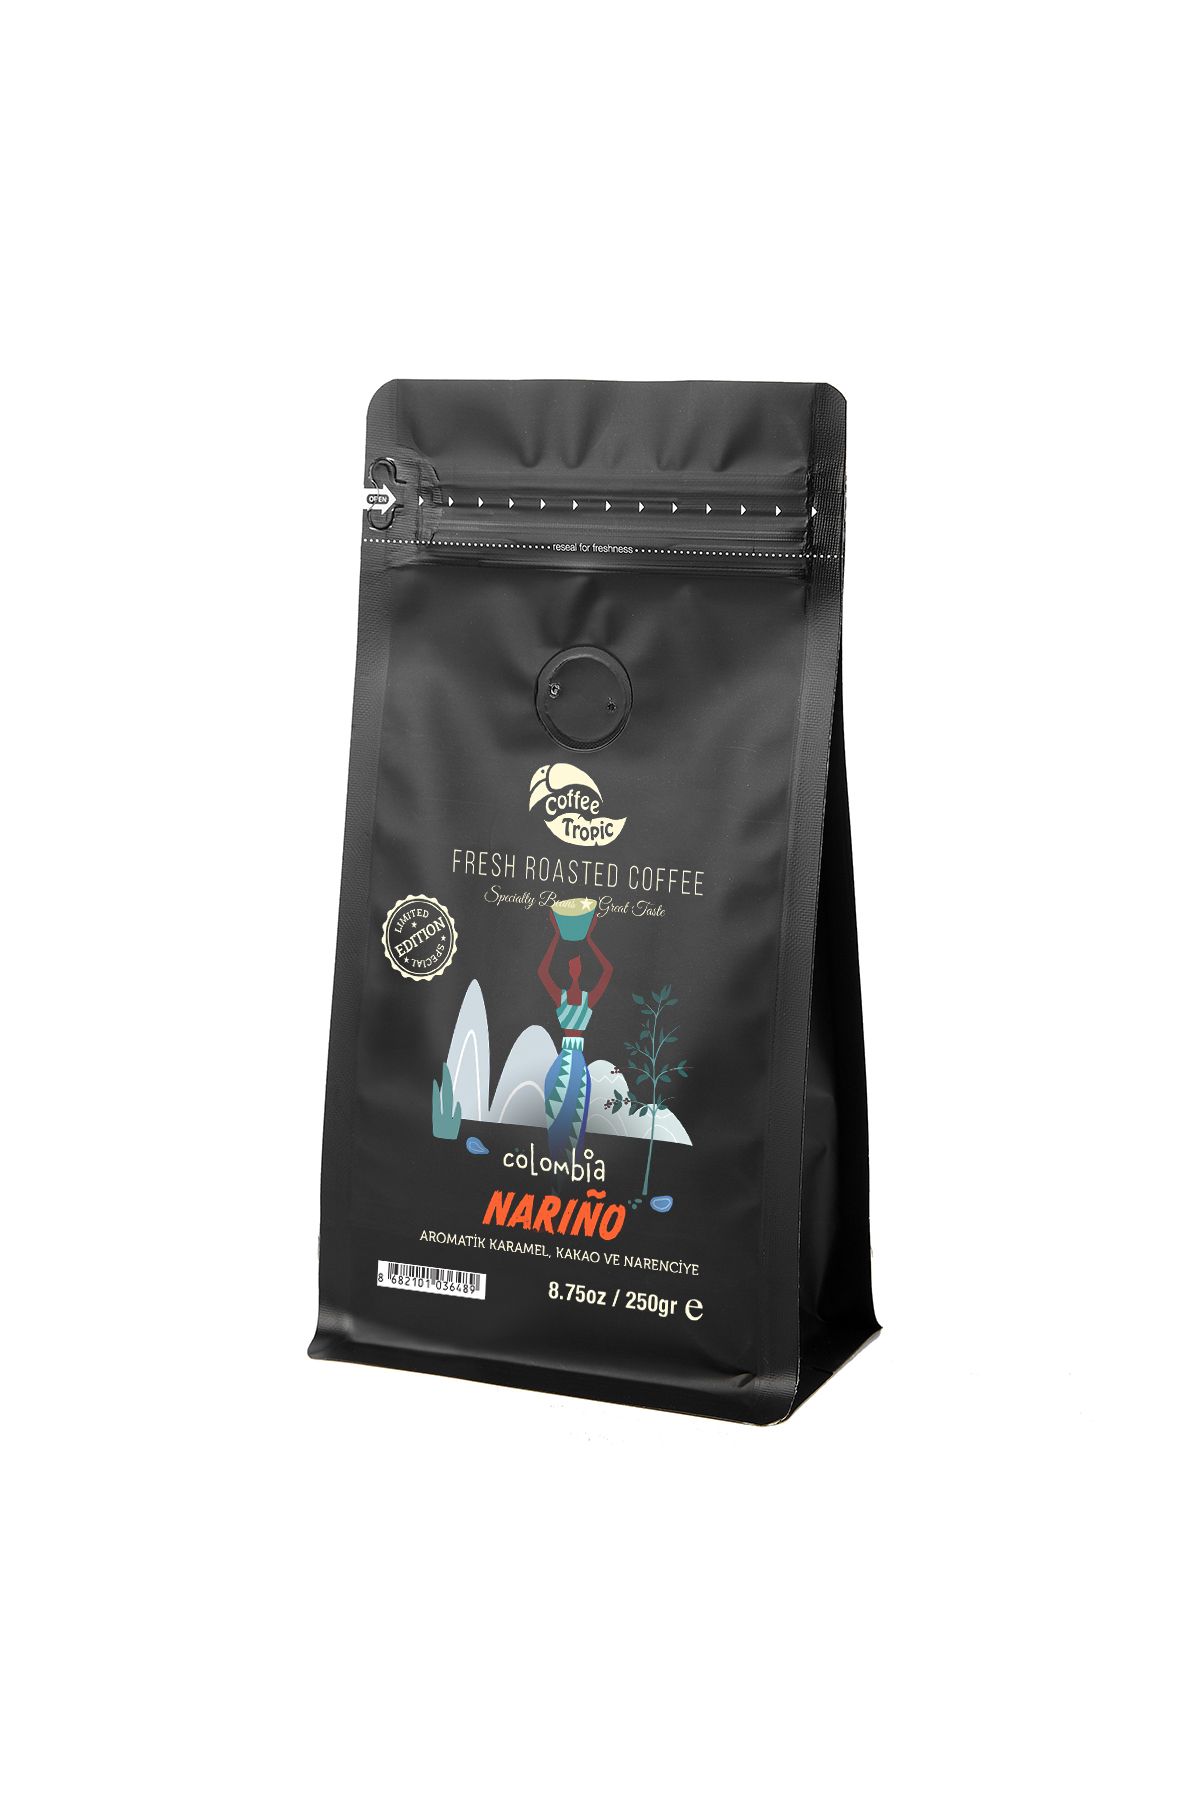 Coffee Tropic Tso Colombia-Narino 250 Gr